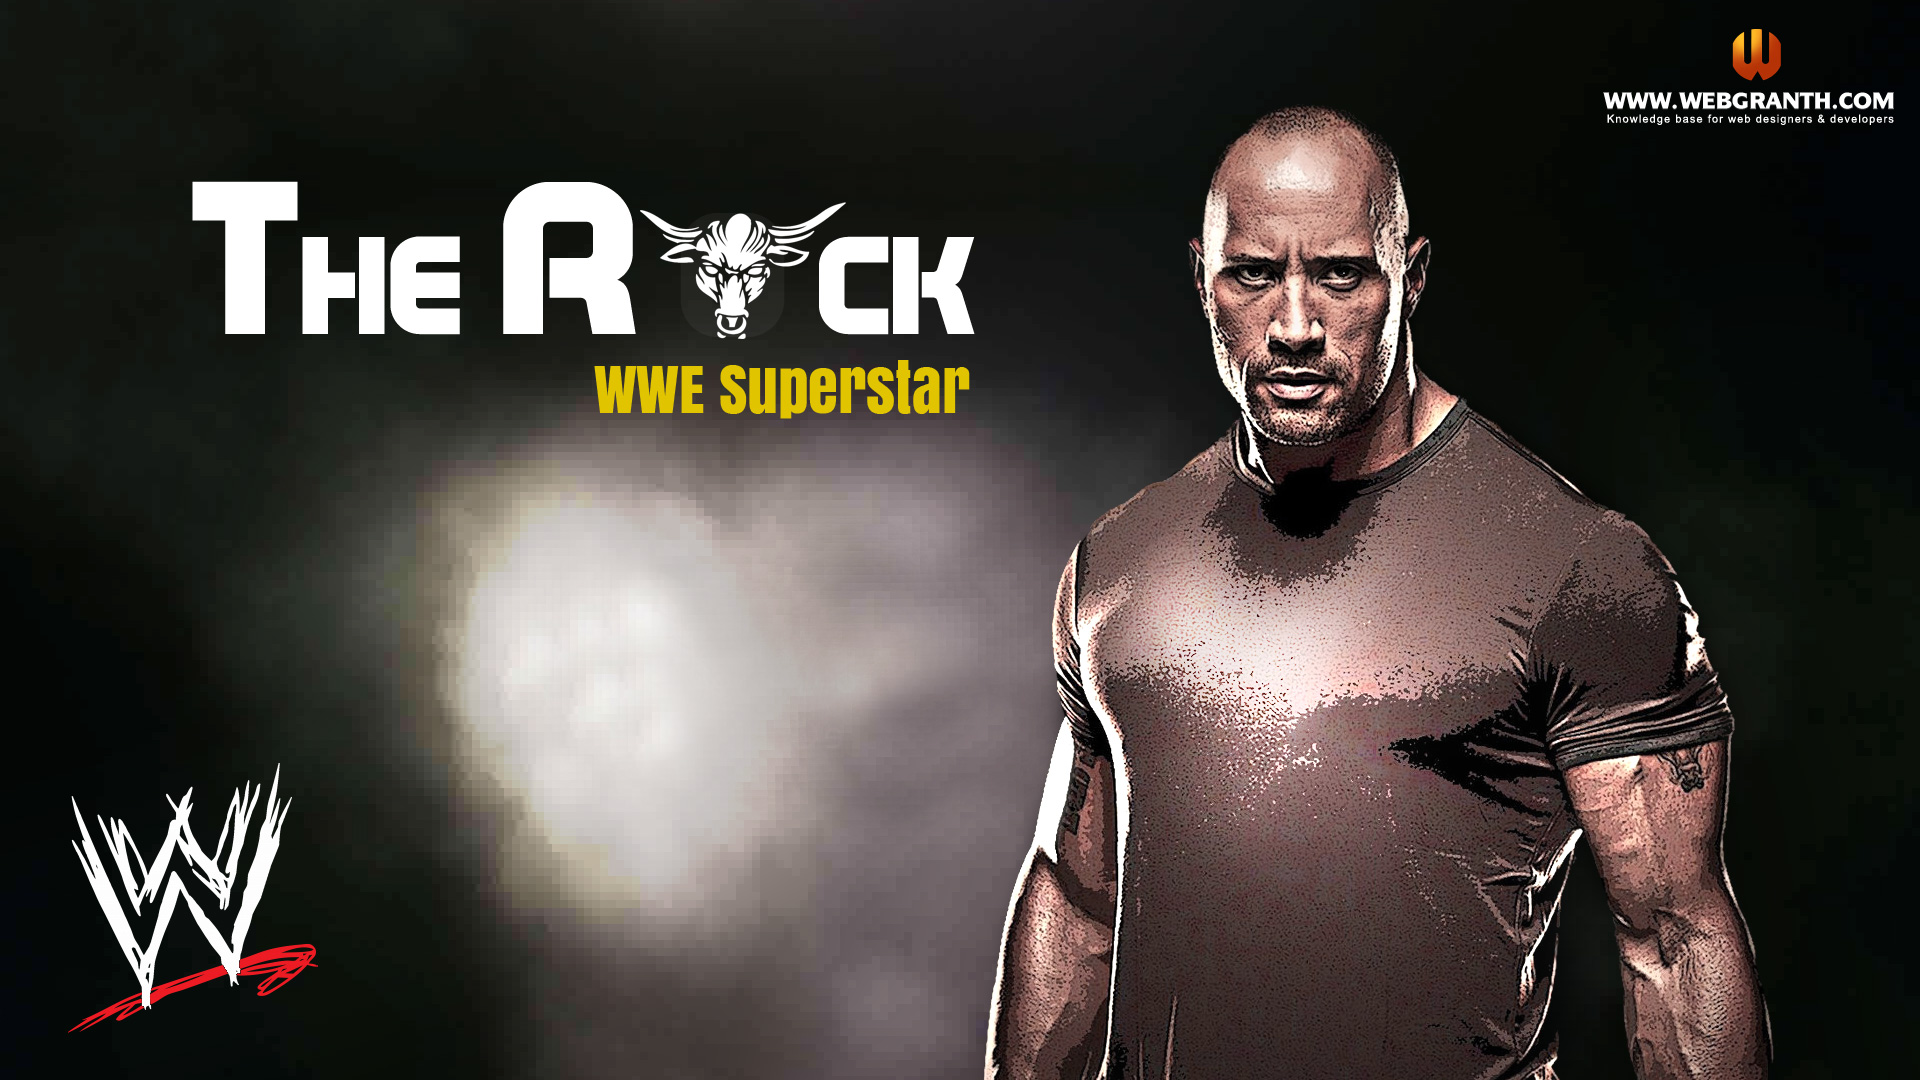 WWE The Rock HD Wallpaper Free Download 3 View HD Image of WWE